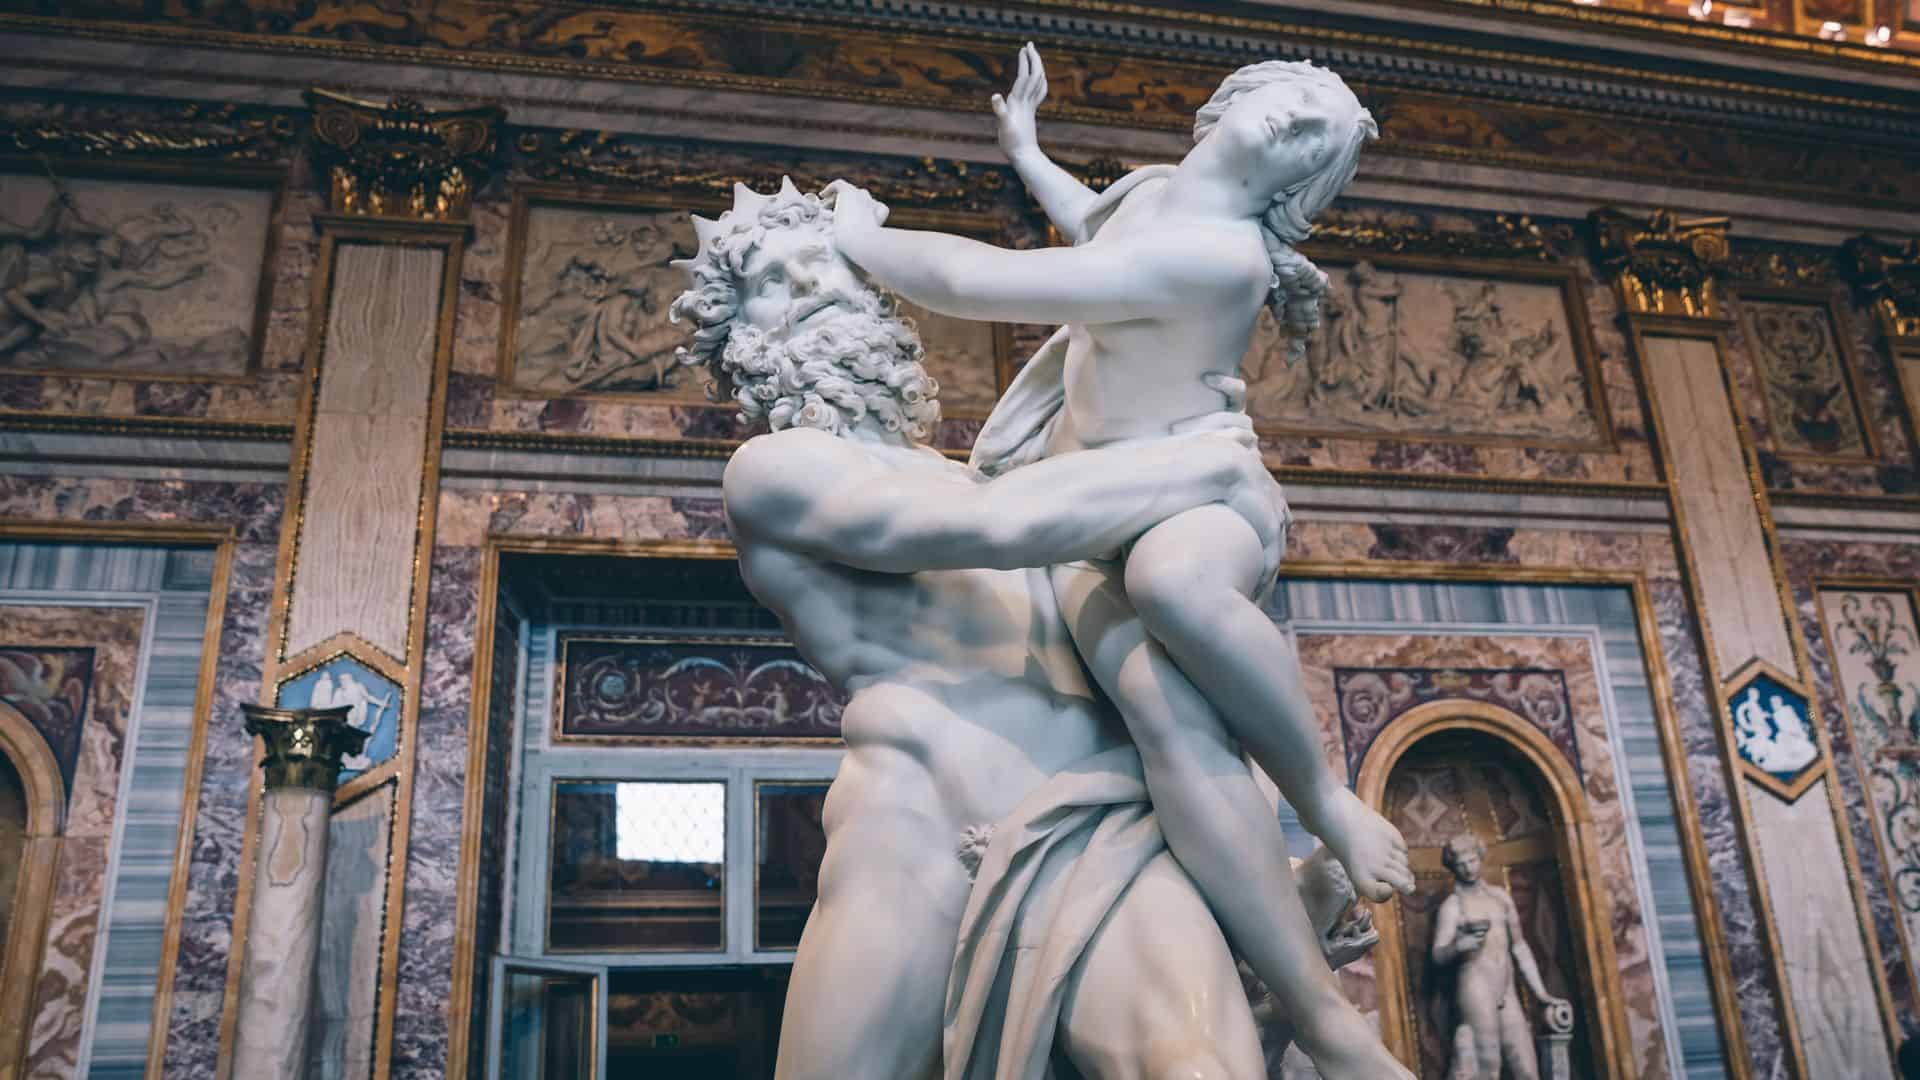 Bernini's "Rape of Proserpina" statue located inside the Borghese Gallery.